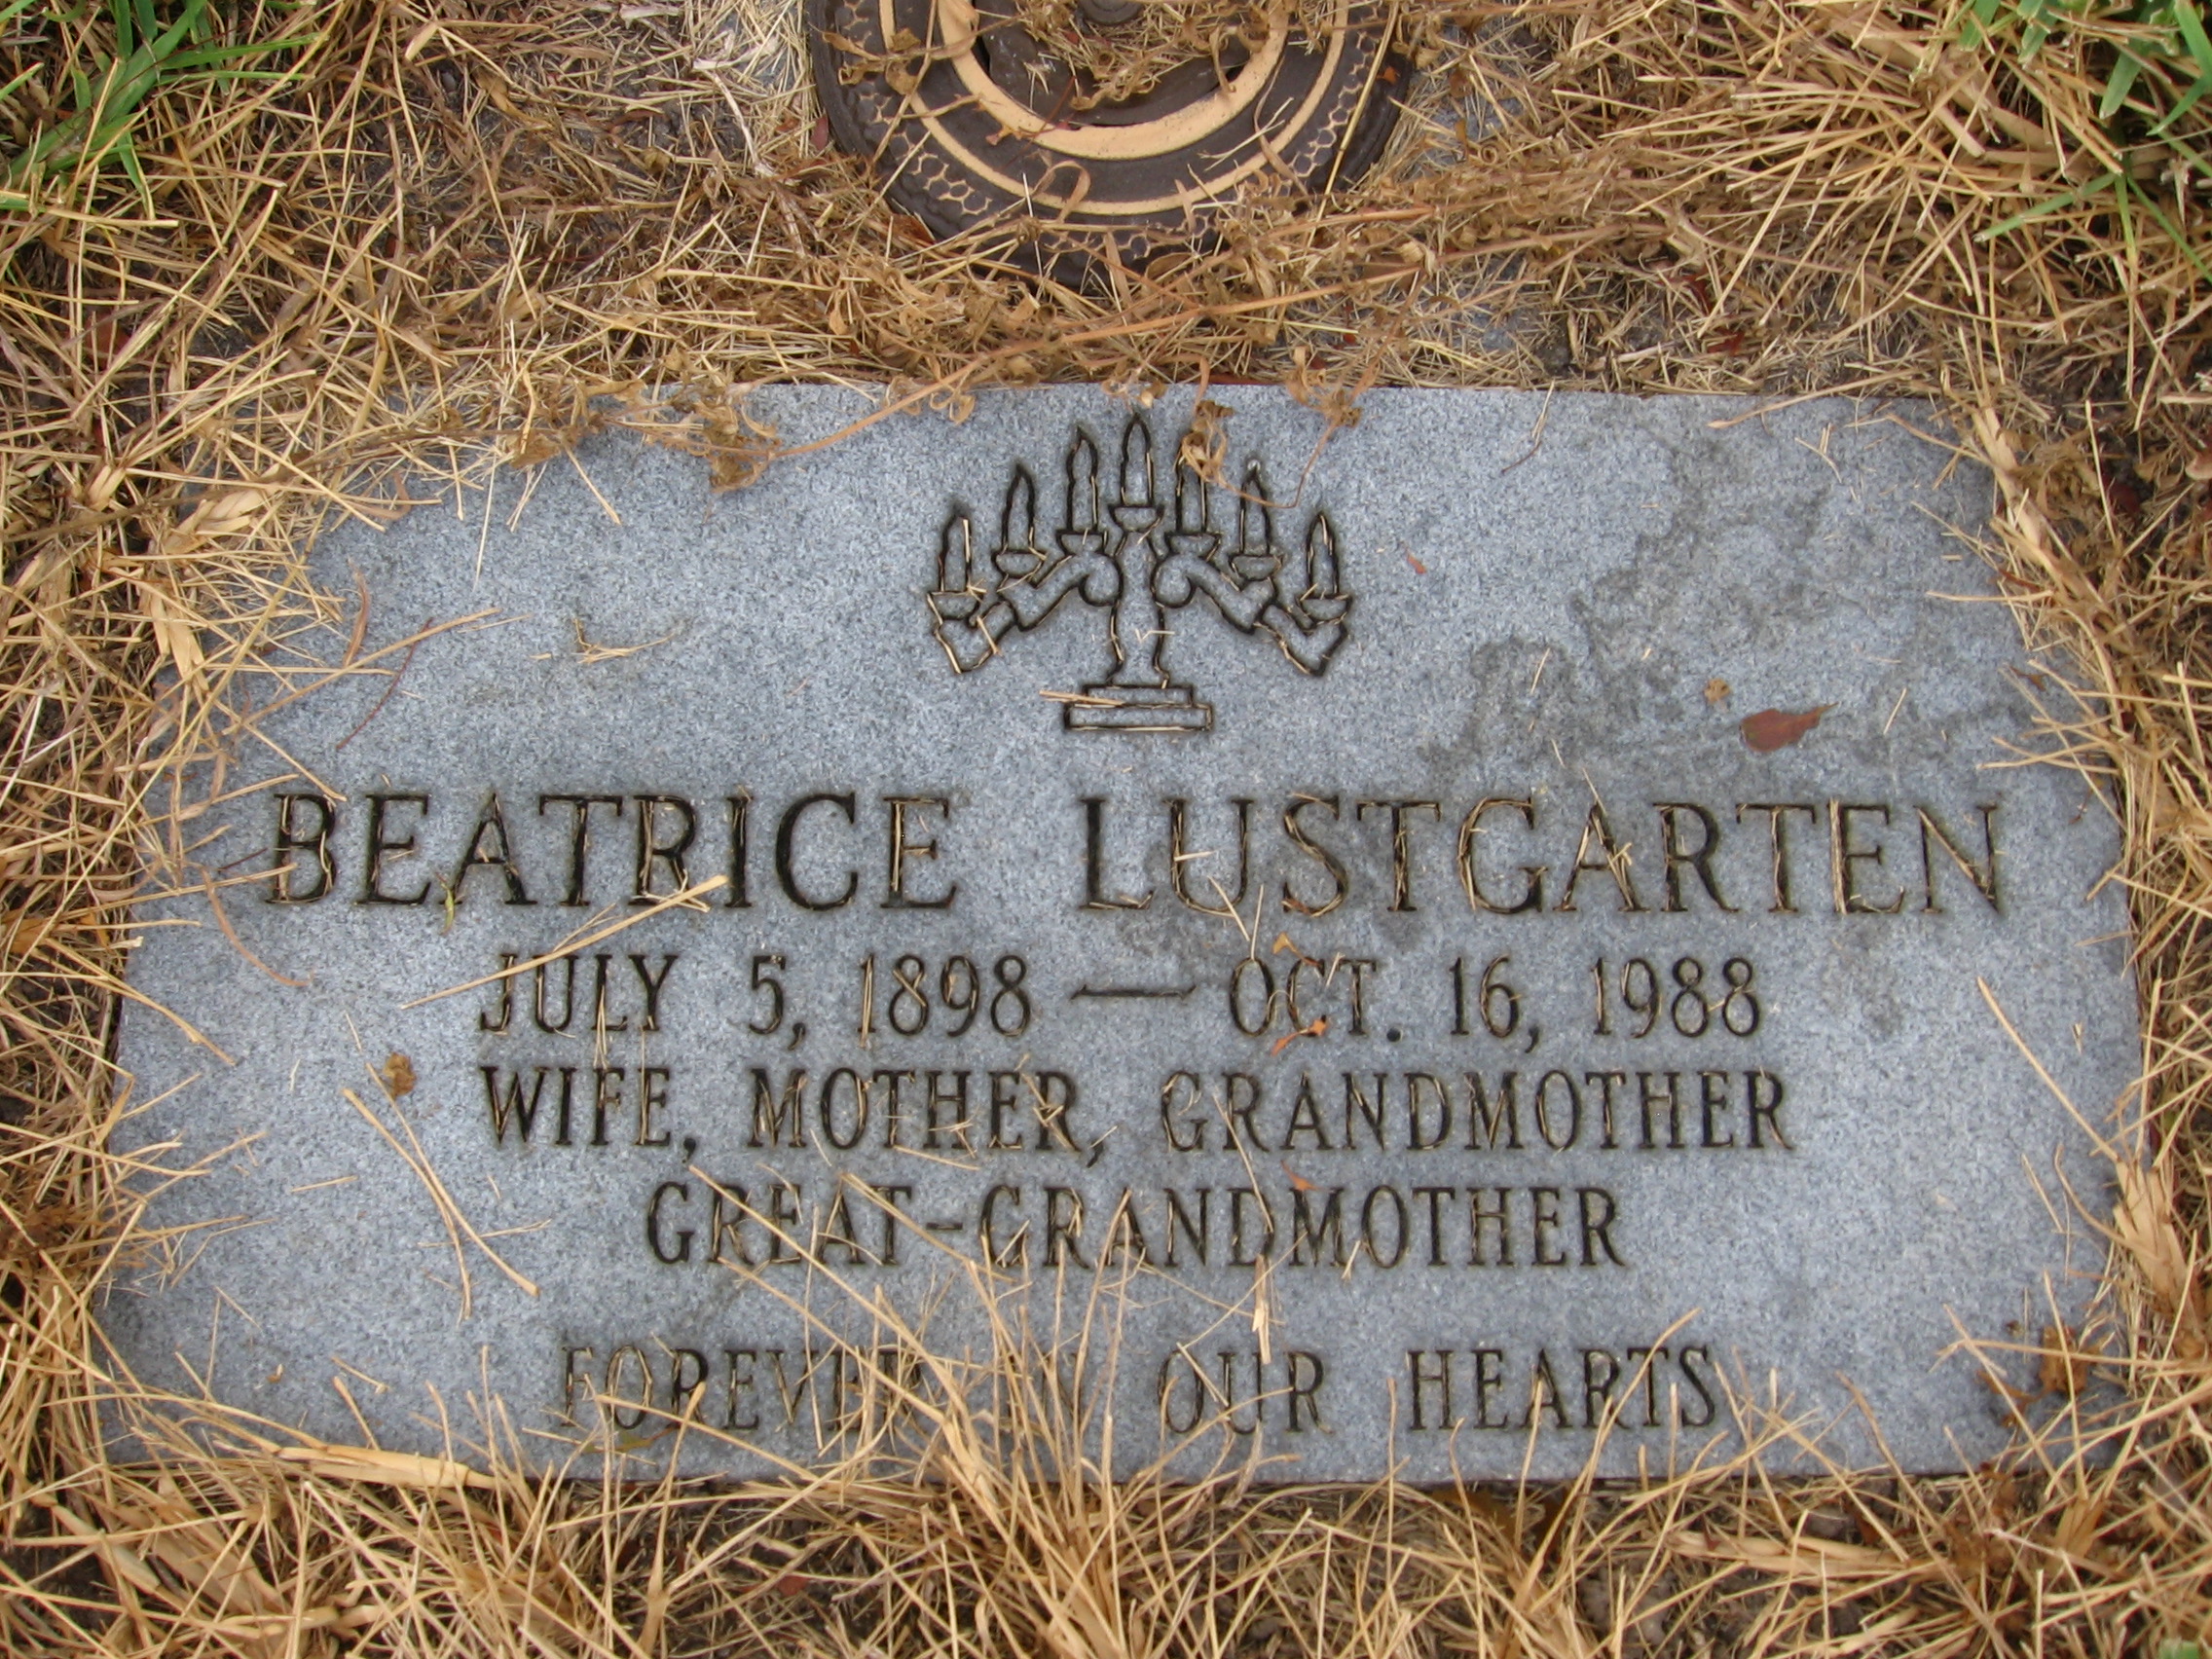 Beatrice Lustgarten